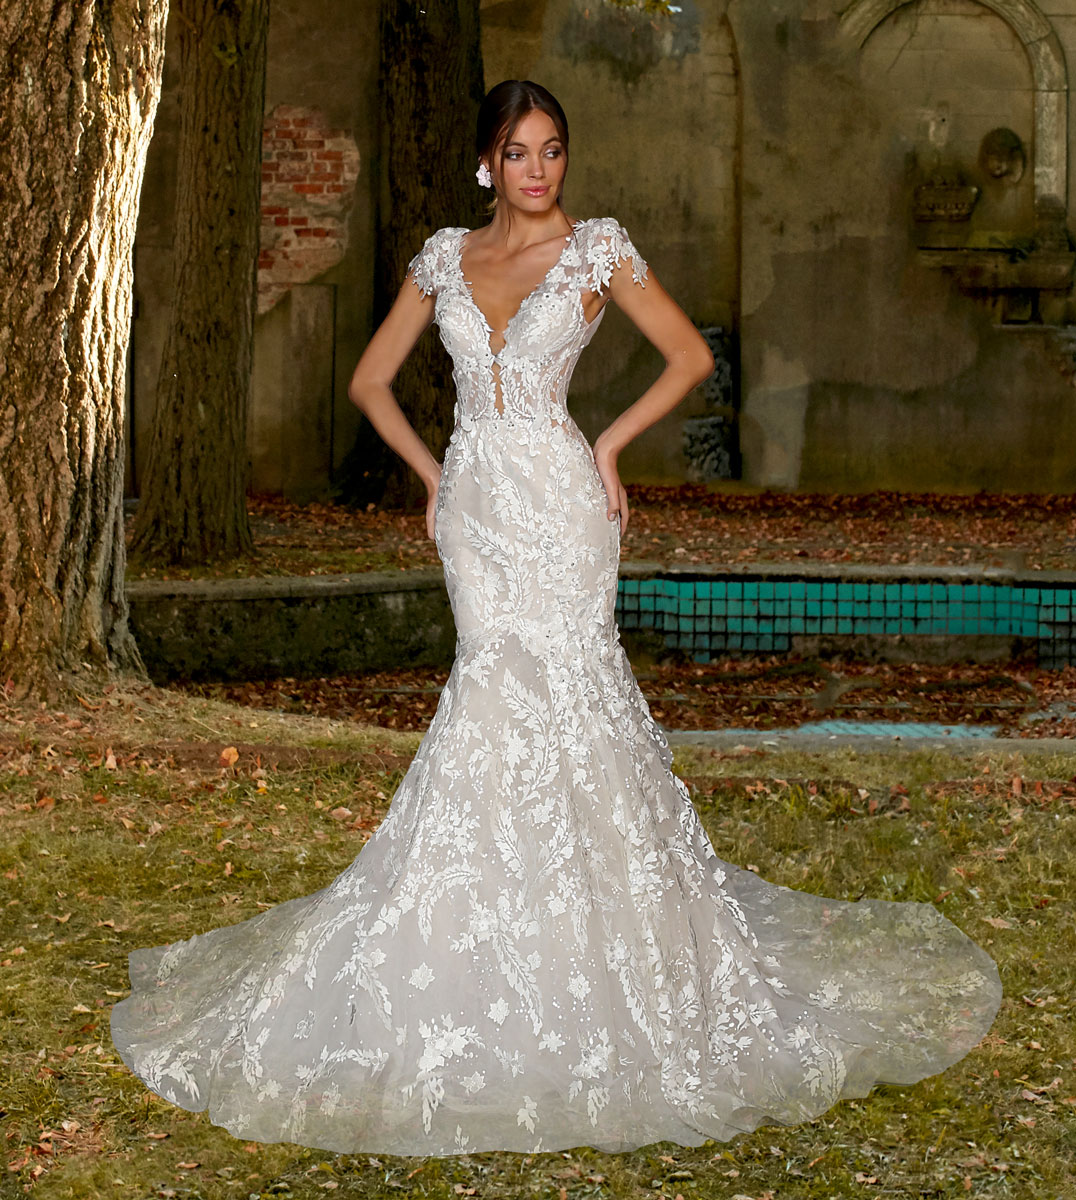 Sleeveless Mermaid Wedding Dress With Illusion Lace Bodice And